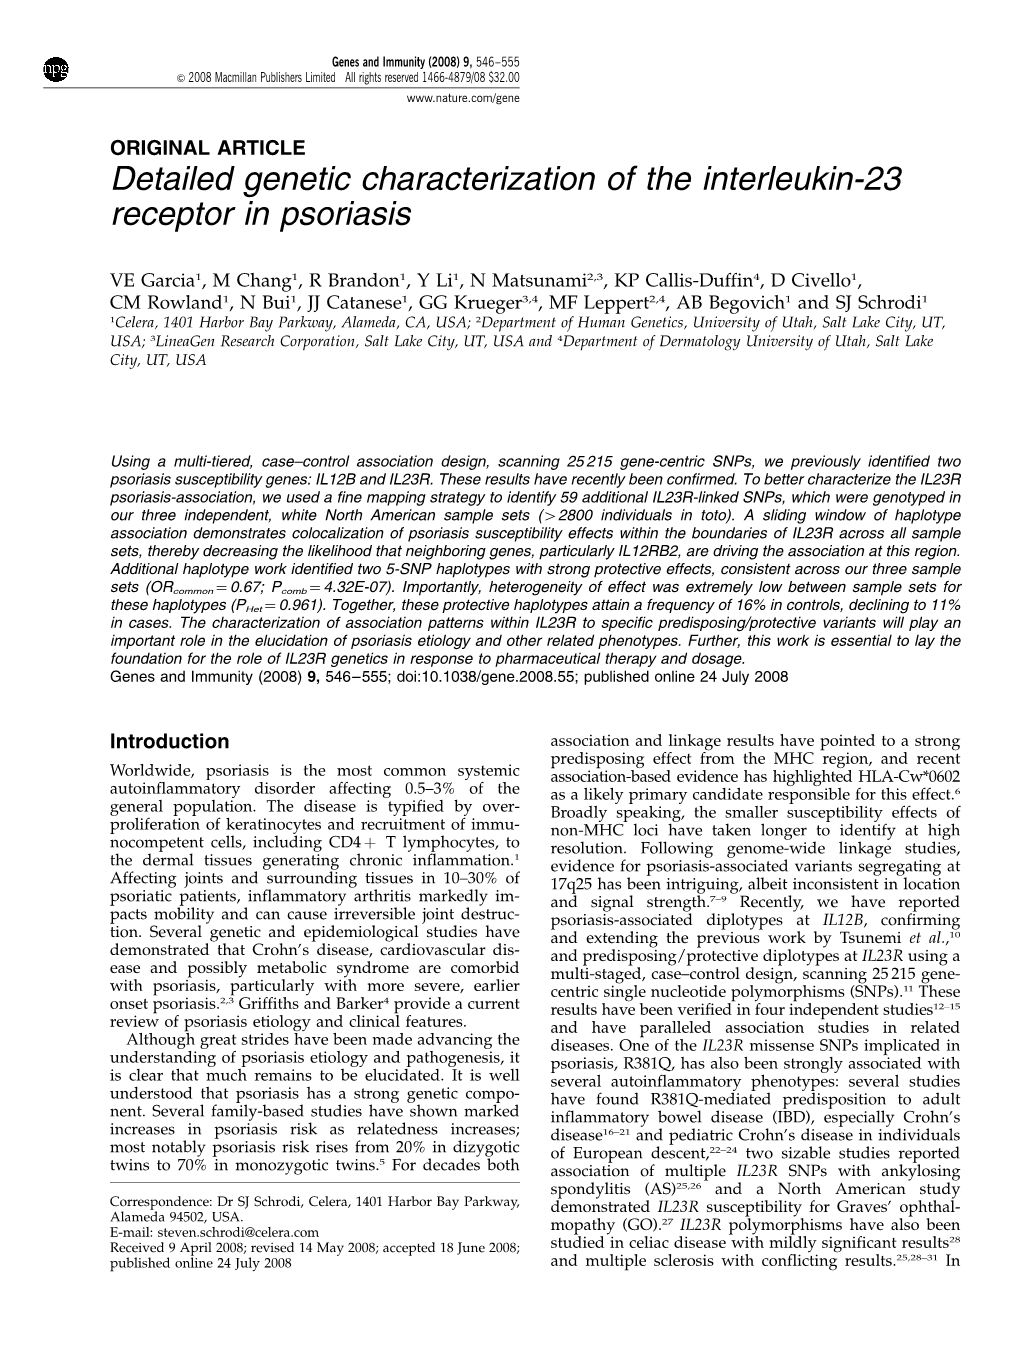 Detailed Genetic Characterization of the Interleukin-23 Receptor in Psoriasis